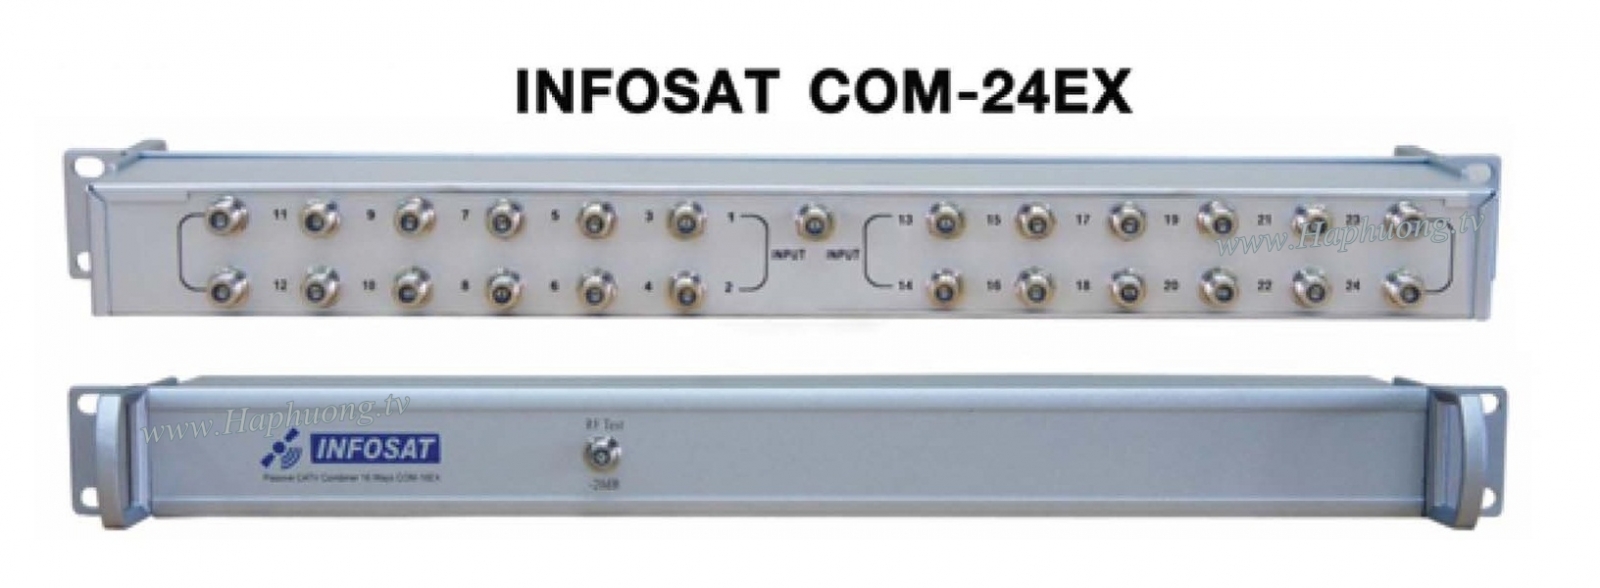 Trộn tín hiệu 24 ngõ Infosat COM-24EX